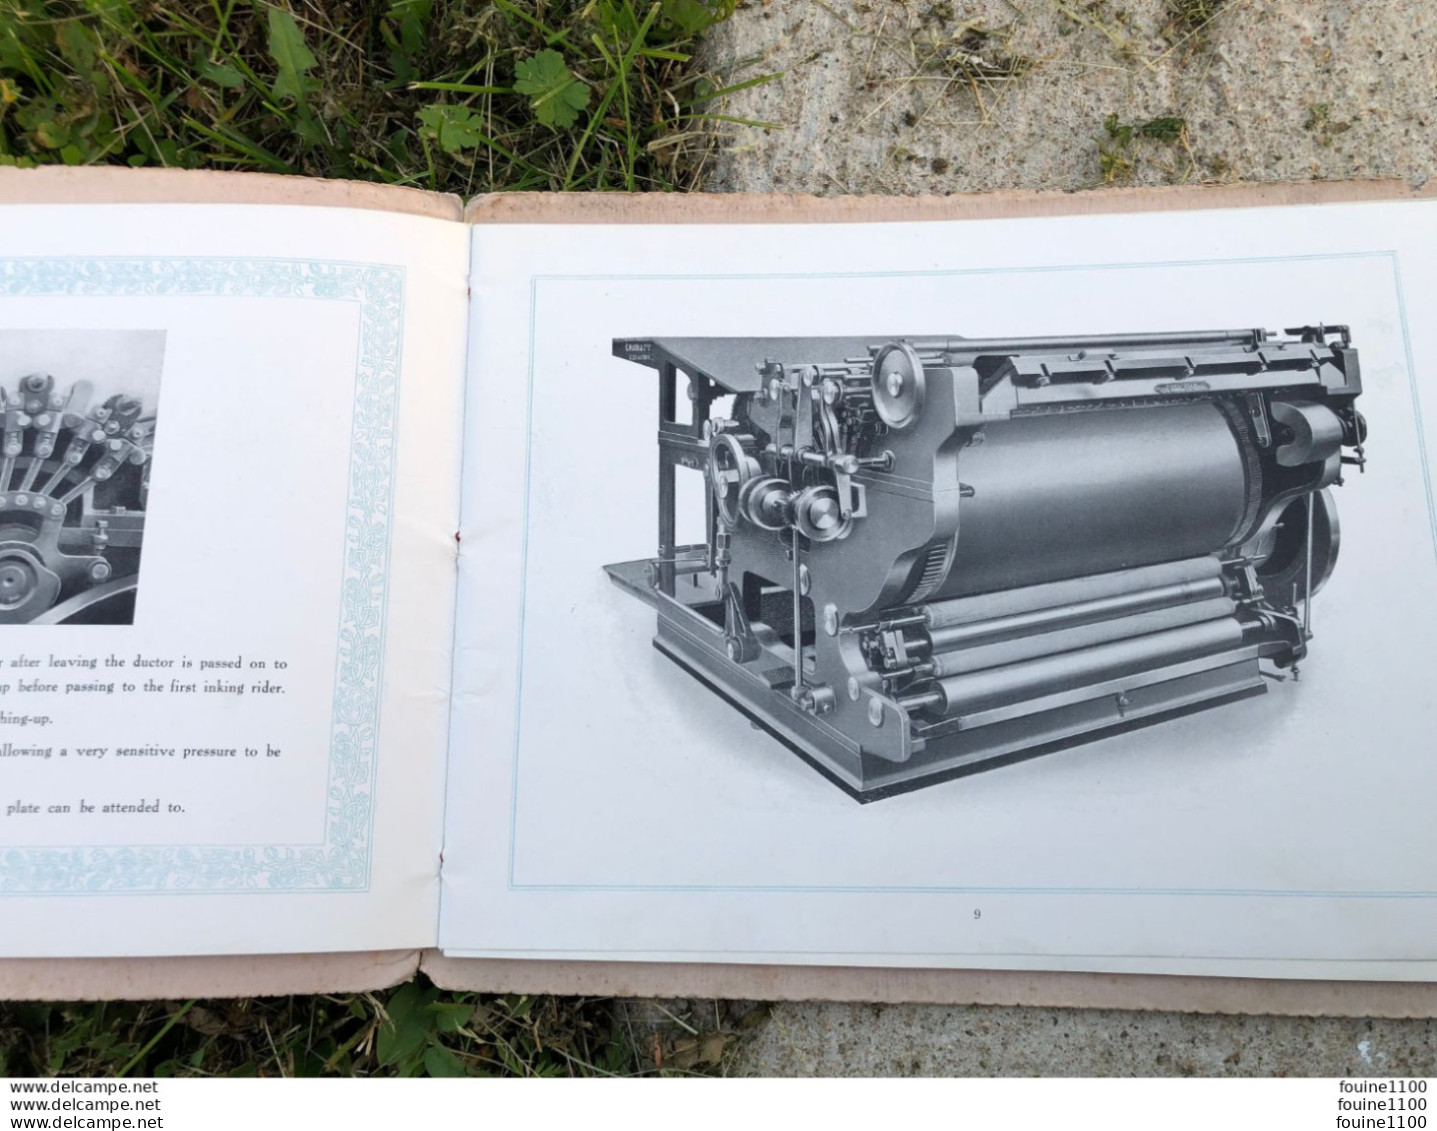 Catalogue MACHINES D'IMPRIMERIE PRESSES ROTATIVES TYPOGRAPHIQUES Georges MANN & Co LEEDS Machinery Lithographic Rotary - Non Classés